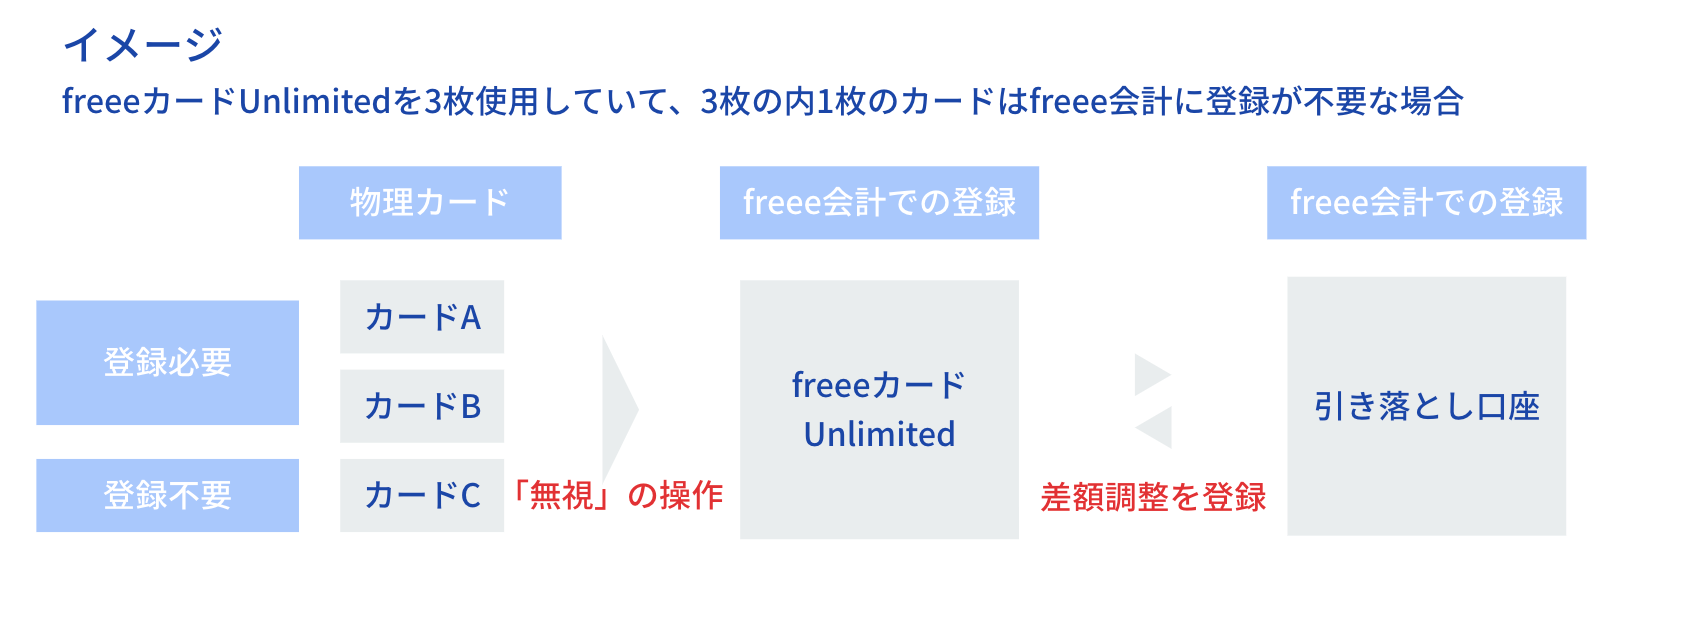 freeeカード Unlimitedを3枚使用していて、3枚の内1枚のカードはfreee会計に登録が不要な場合のイメージ図